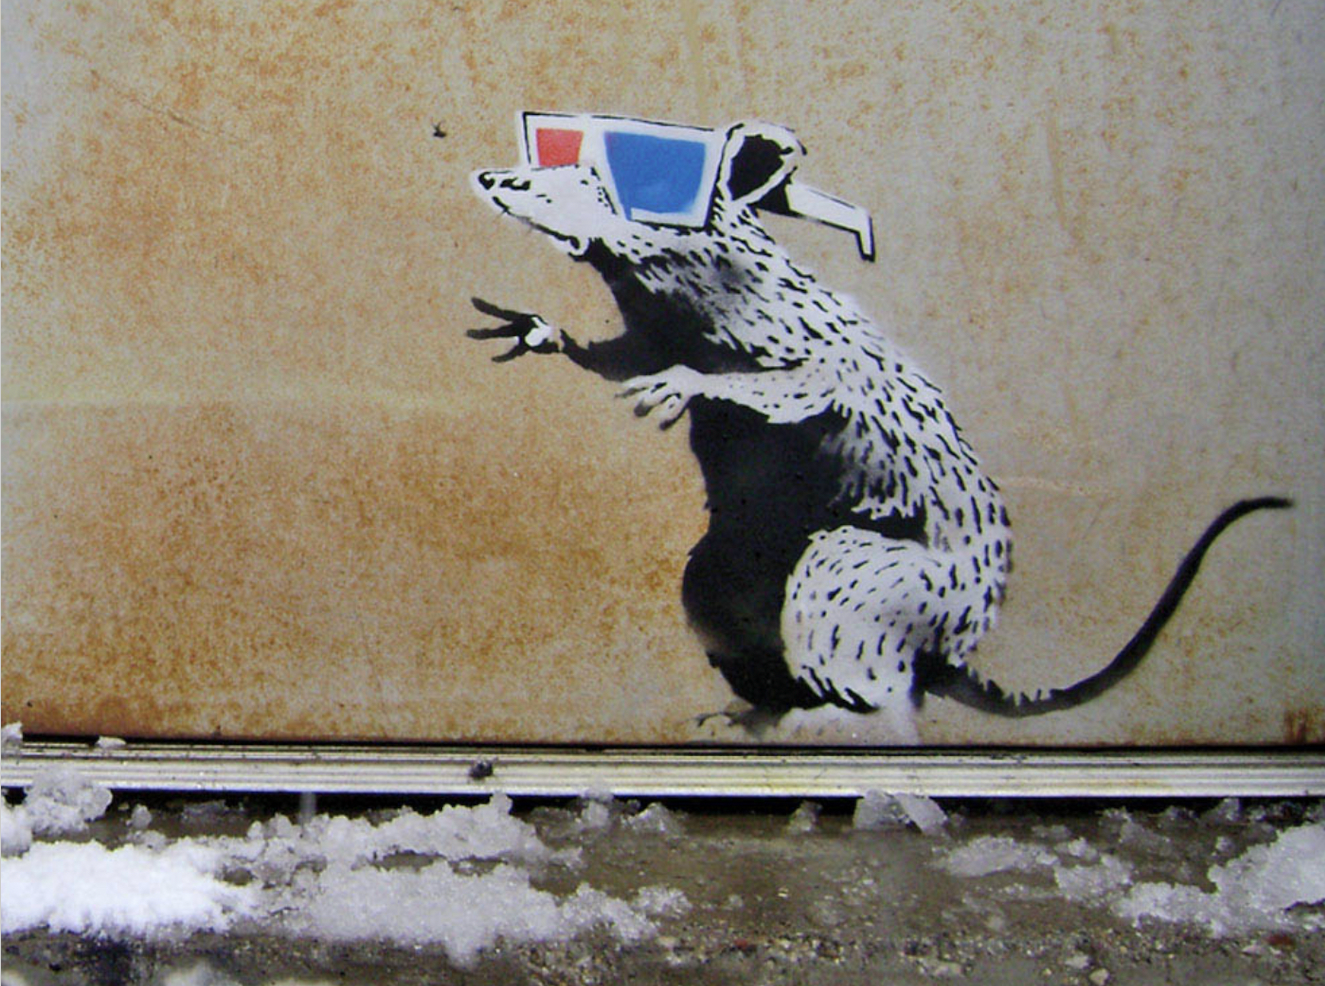 Banksy, Rat with 3D Glasses, 2010